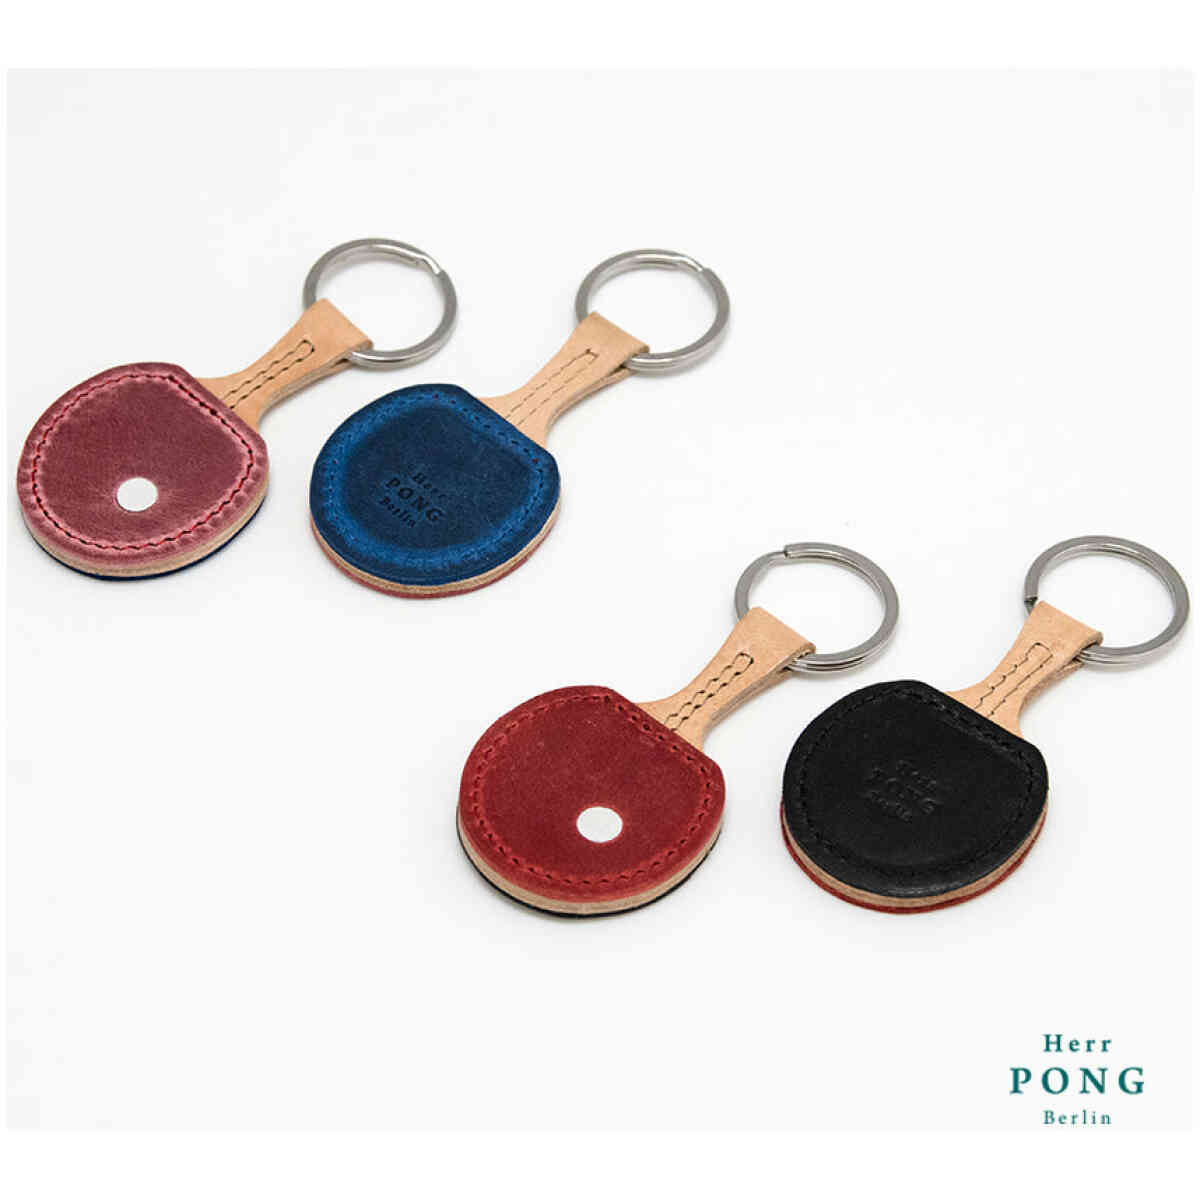 HPB Pink Ping Pong20190817